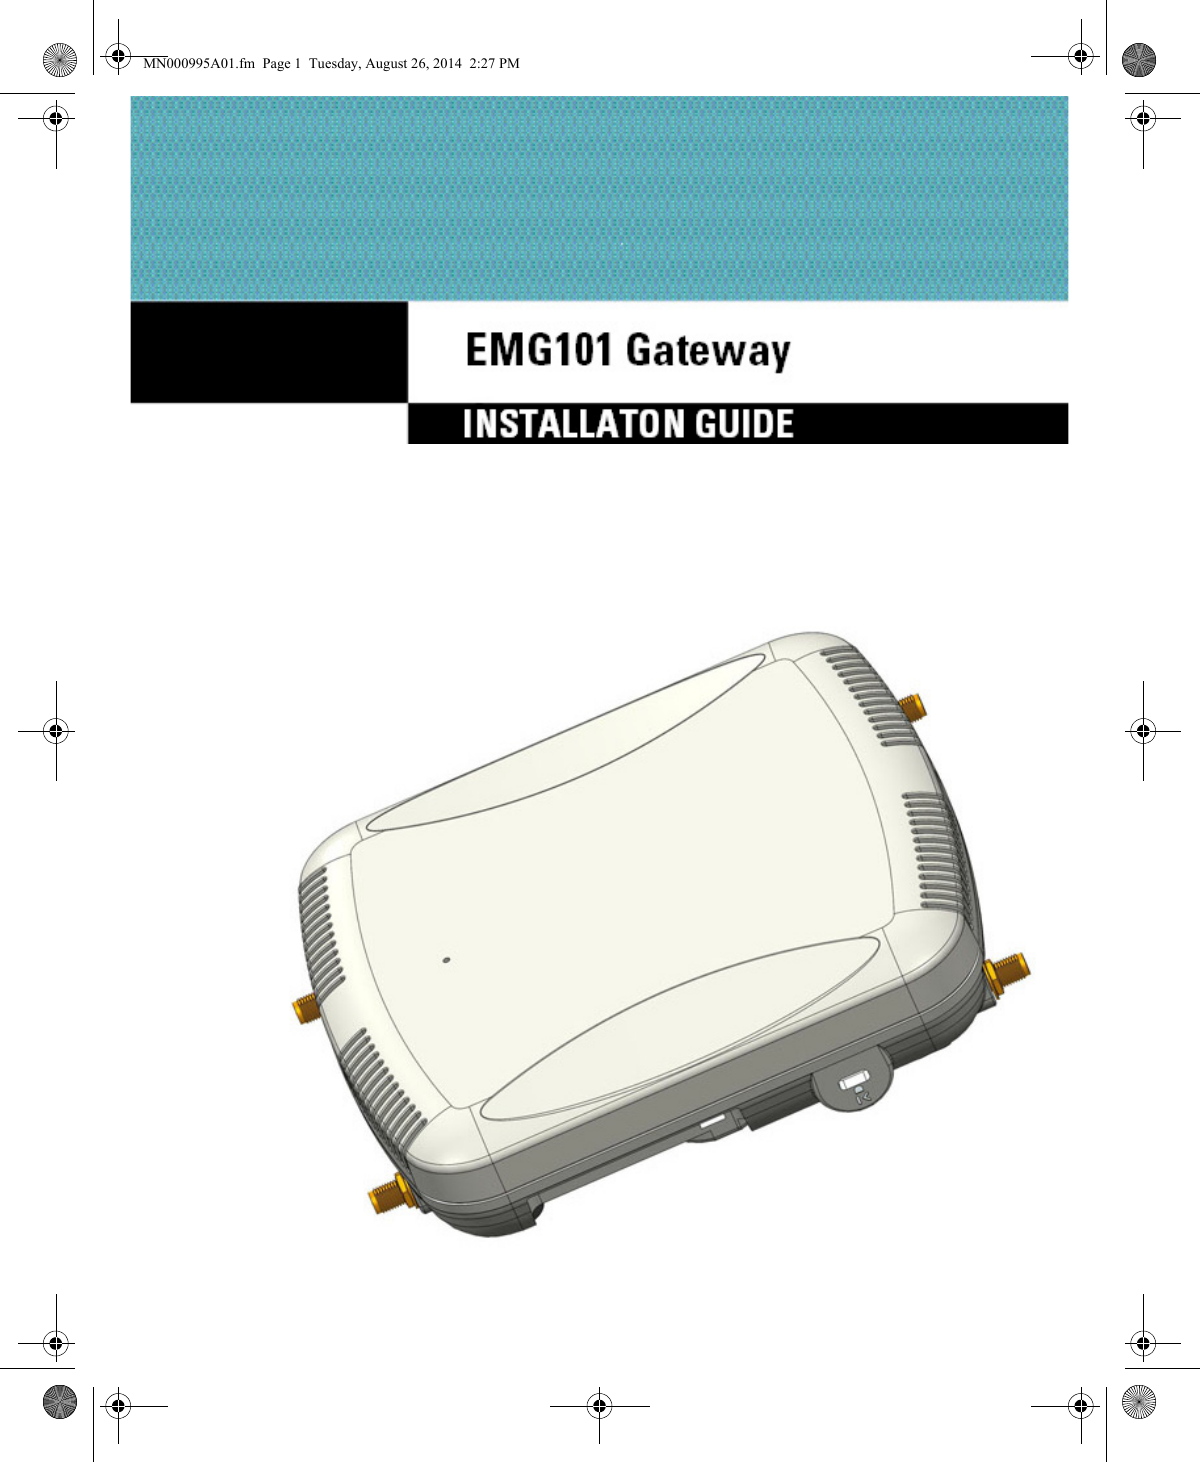 EMG101 GatewayINSTALLATION GUIDEMN000995A01.fm  Page 1  Tuesday, August 26, 2014  2:27 PM